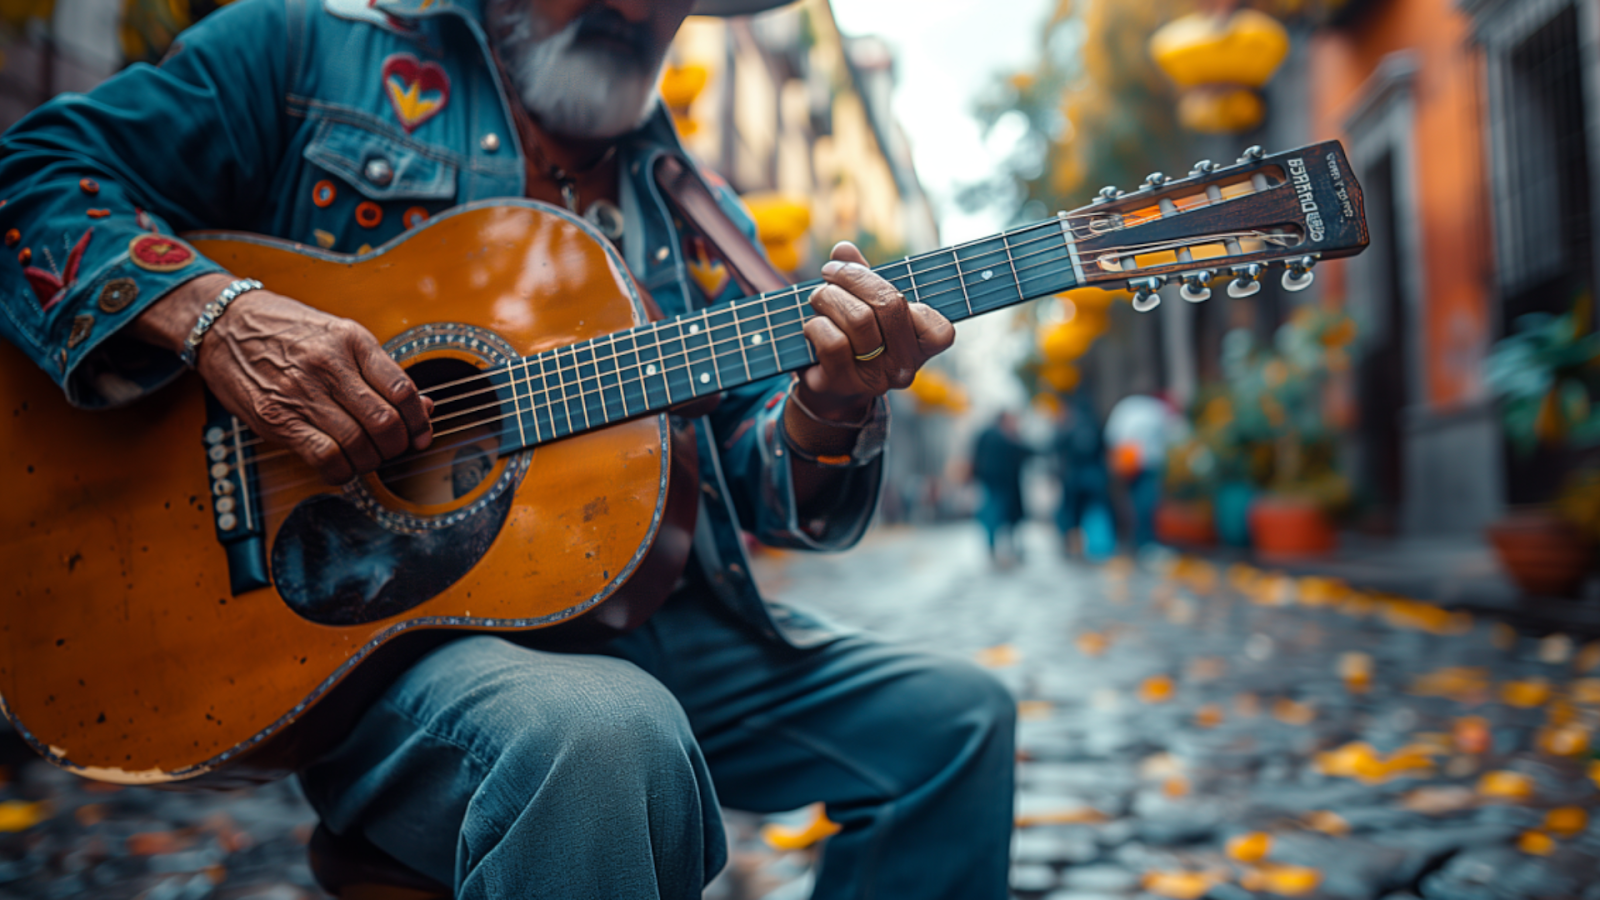 A mariachi musician serenades passersby on a cobblestone street in Mexico City